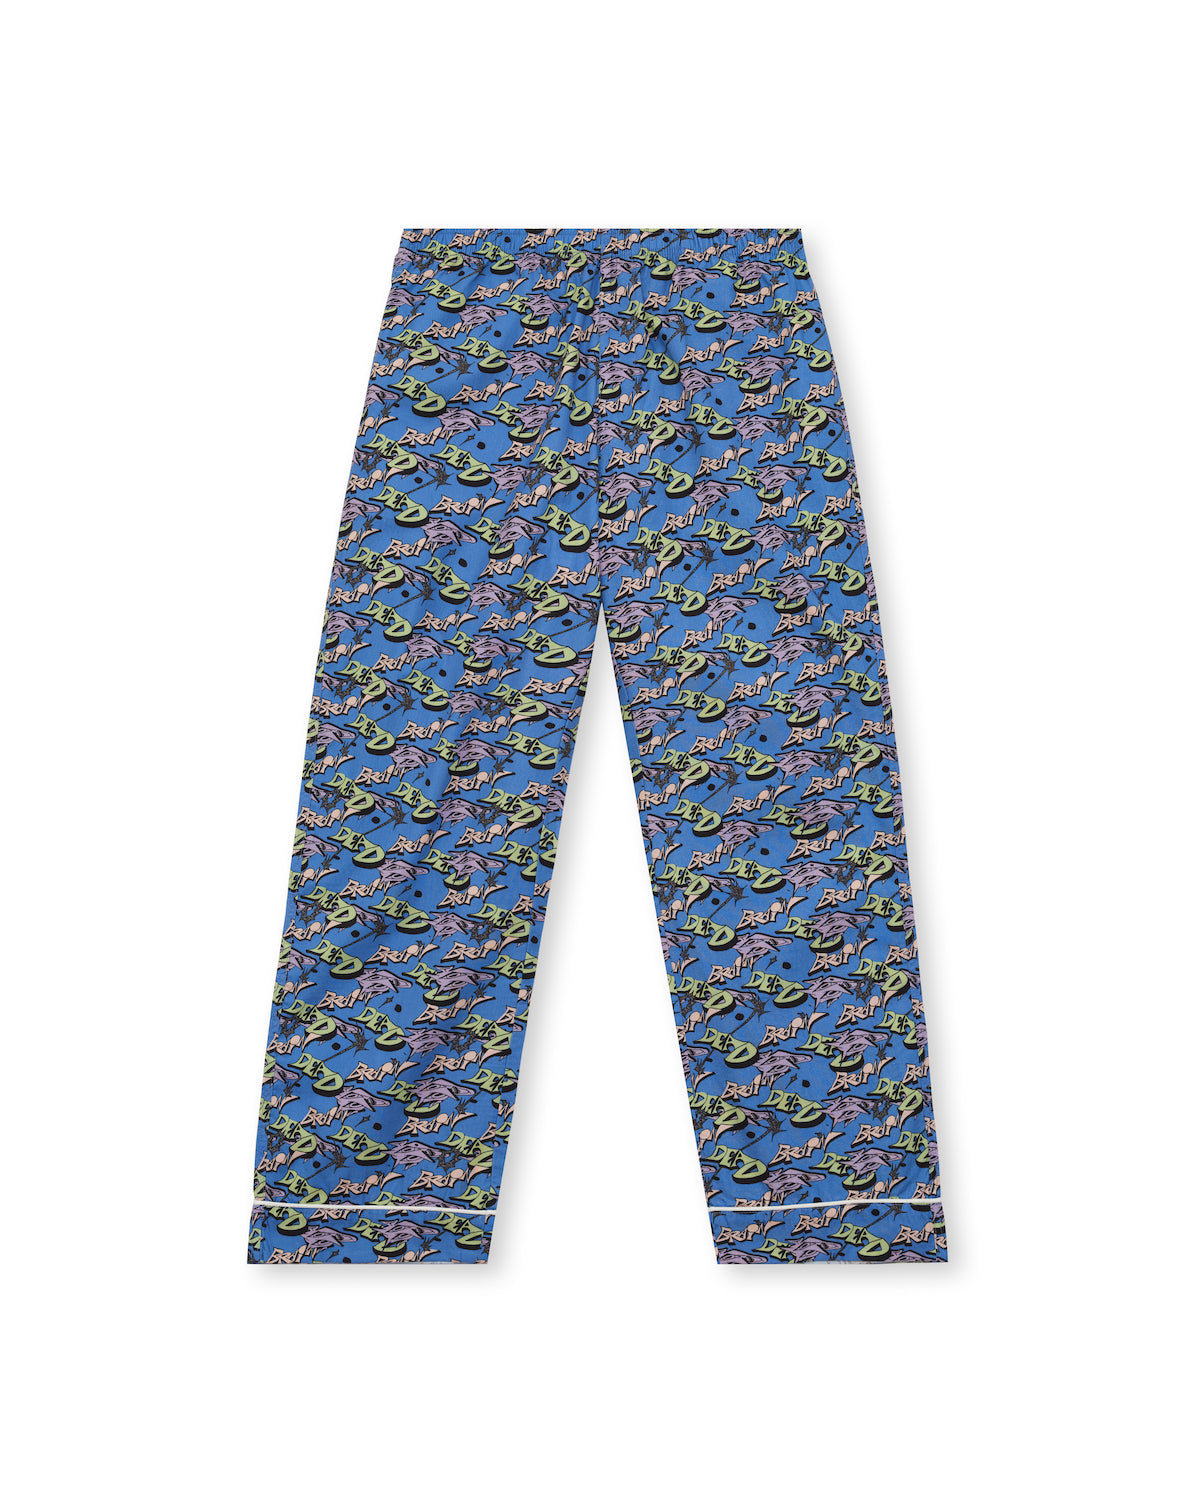 Erratic Pajama Bottom - Multi 1